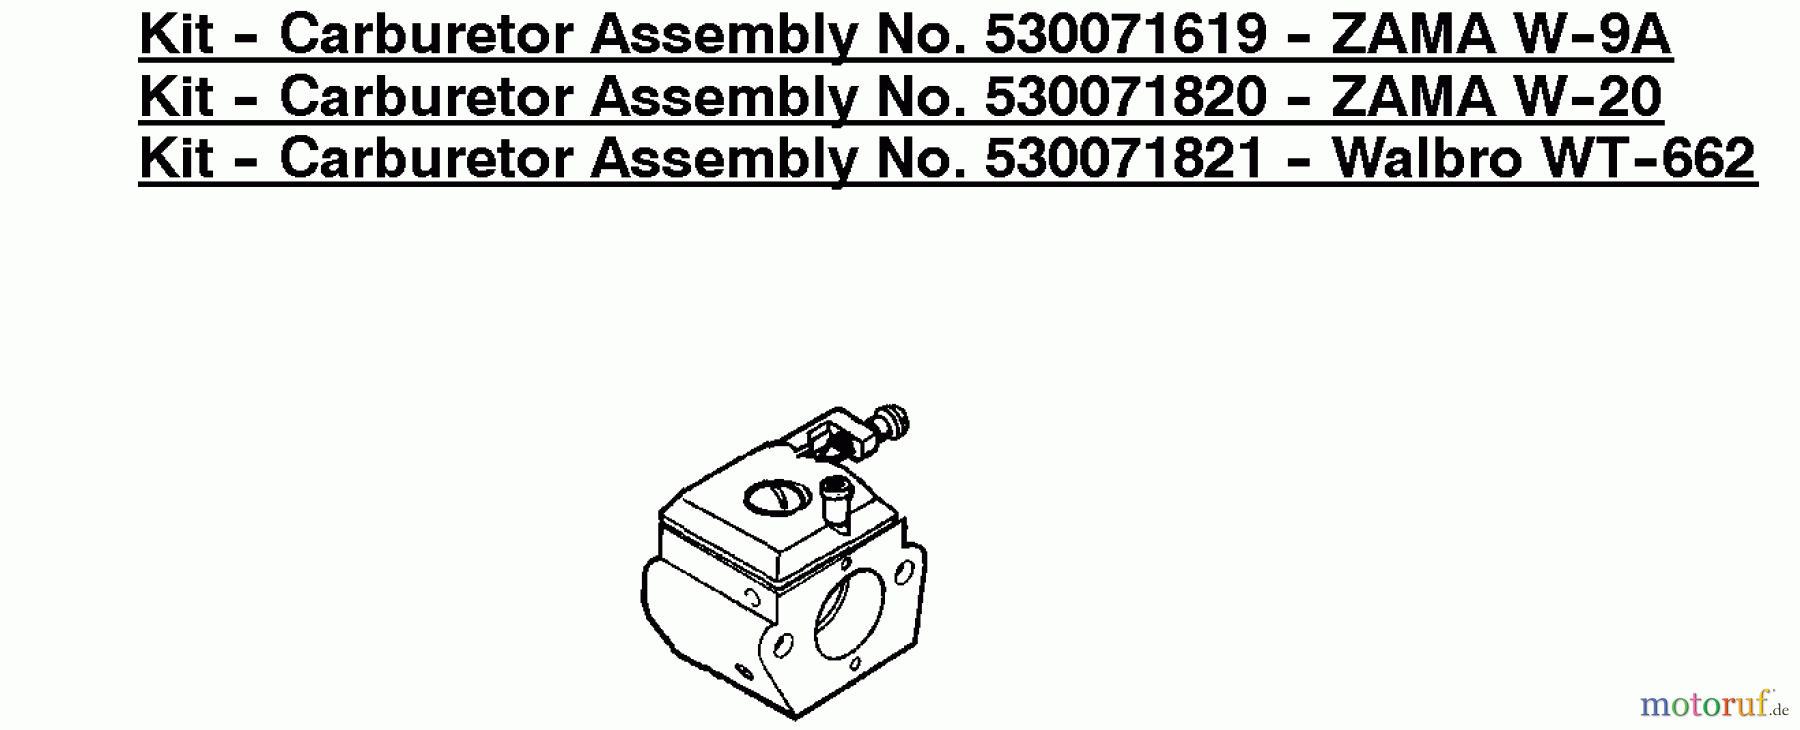  Poulan / Weed Eater Motorsägen 2250LE (Type 1) - Poulan Woodmaster Chainsaw Kit - Carburetor Assembly